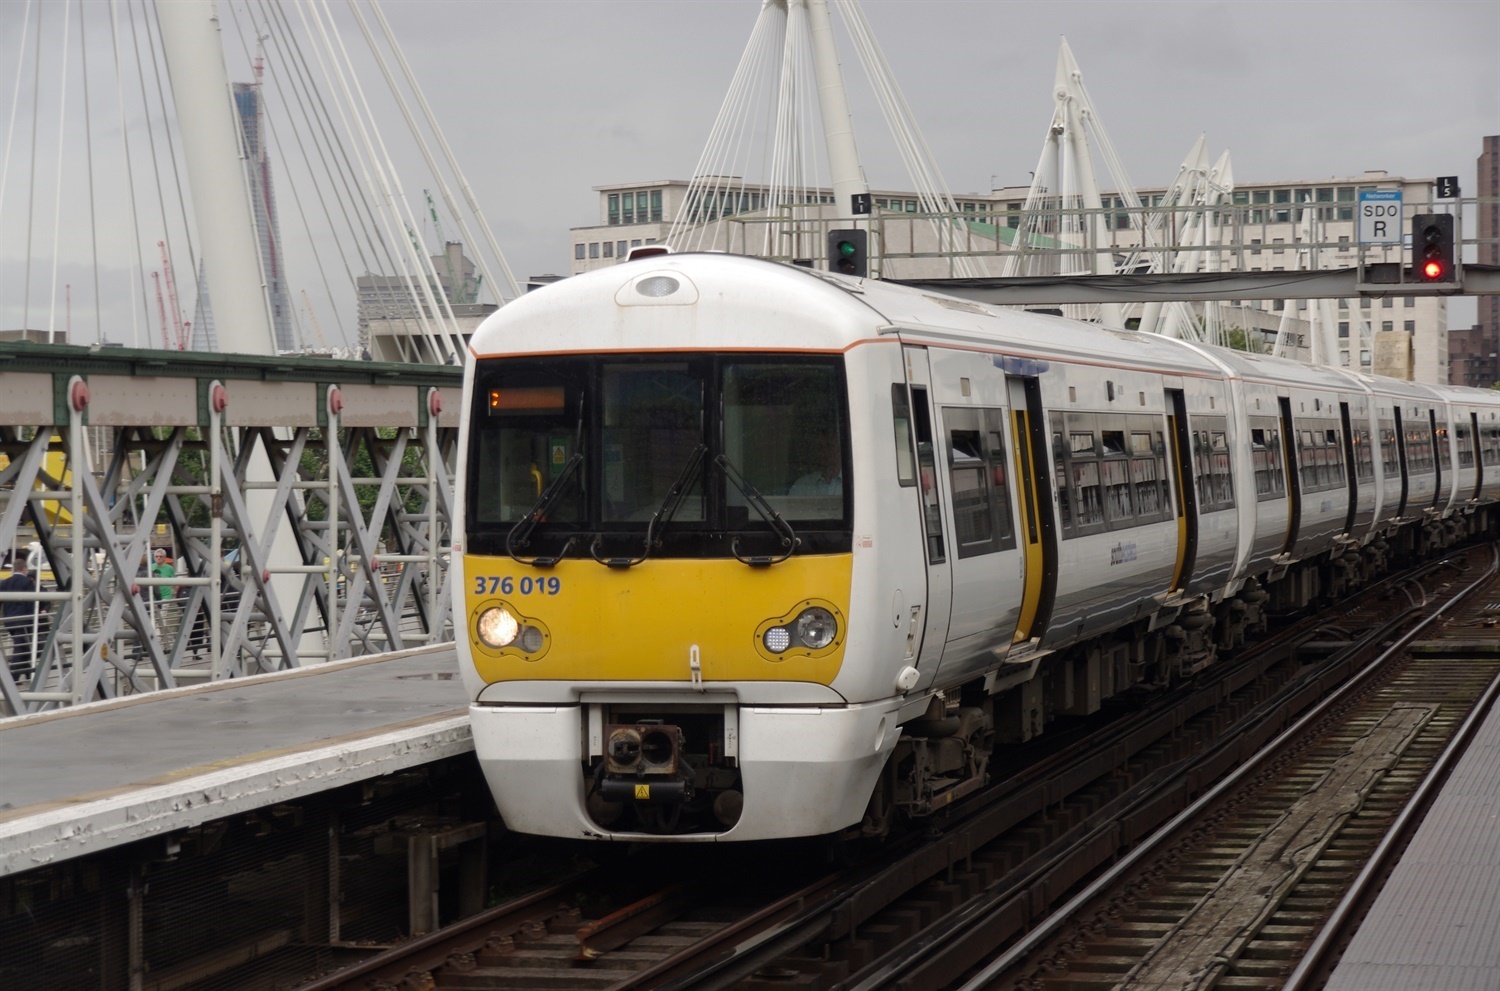 TfL picks London routes ripe for devolution ahead of DfT approval